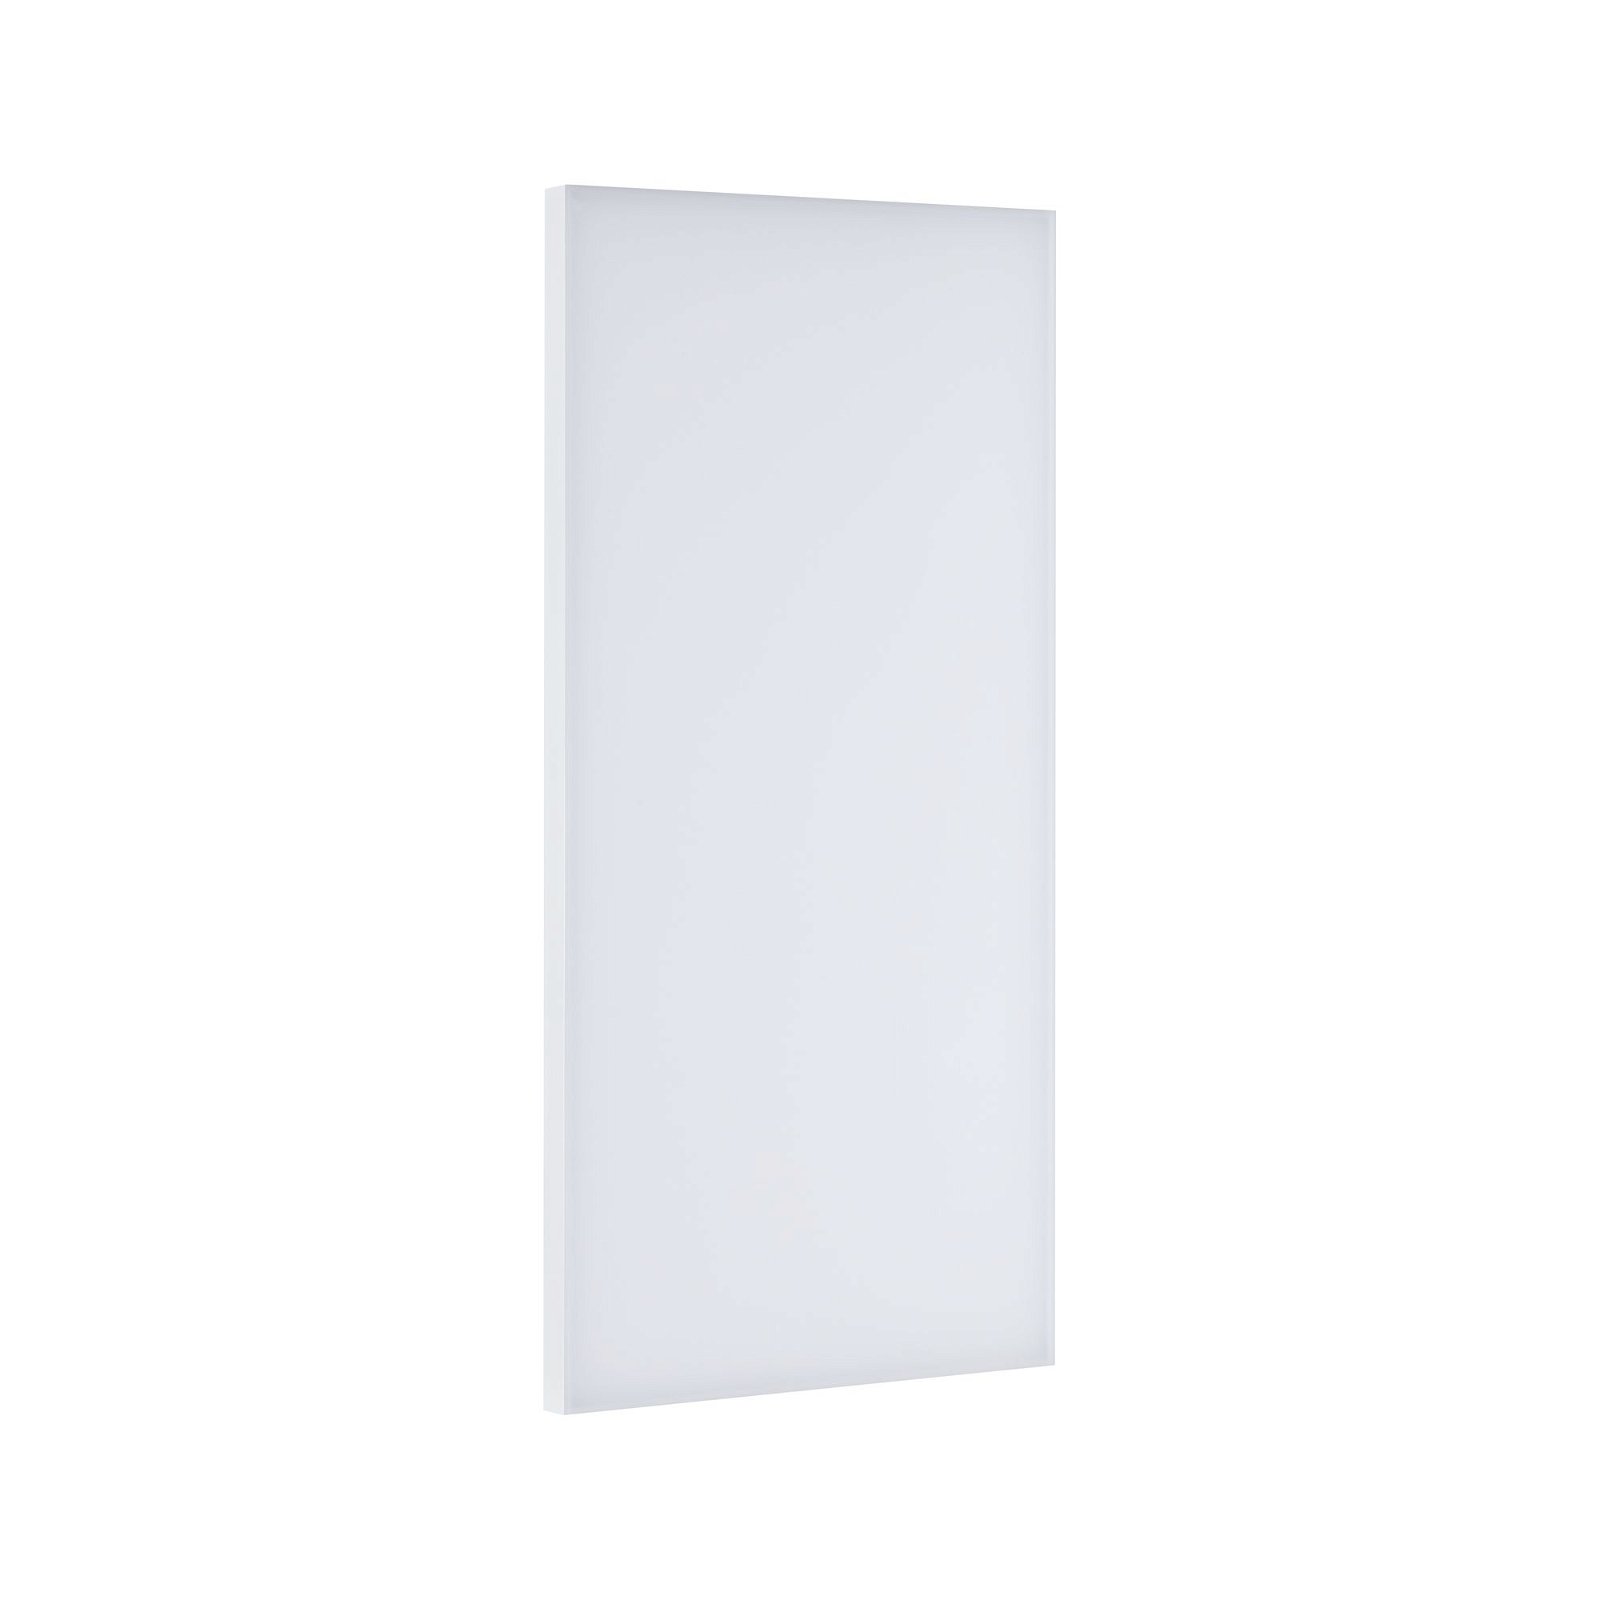 Panneau LED Smart Home Zigbee 3.0 Velora carré 595x295mm 15,5W 1600lm Tunable White Blanc dépoli gradable